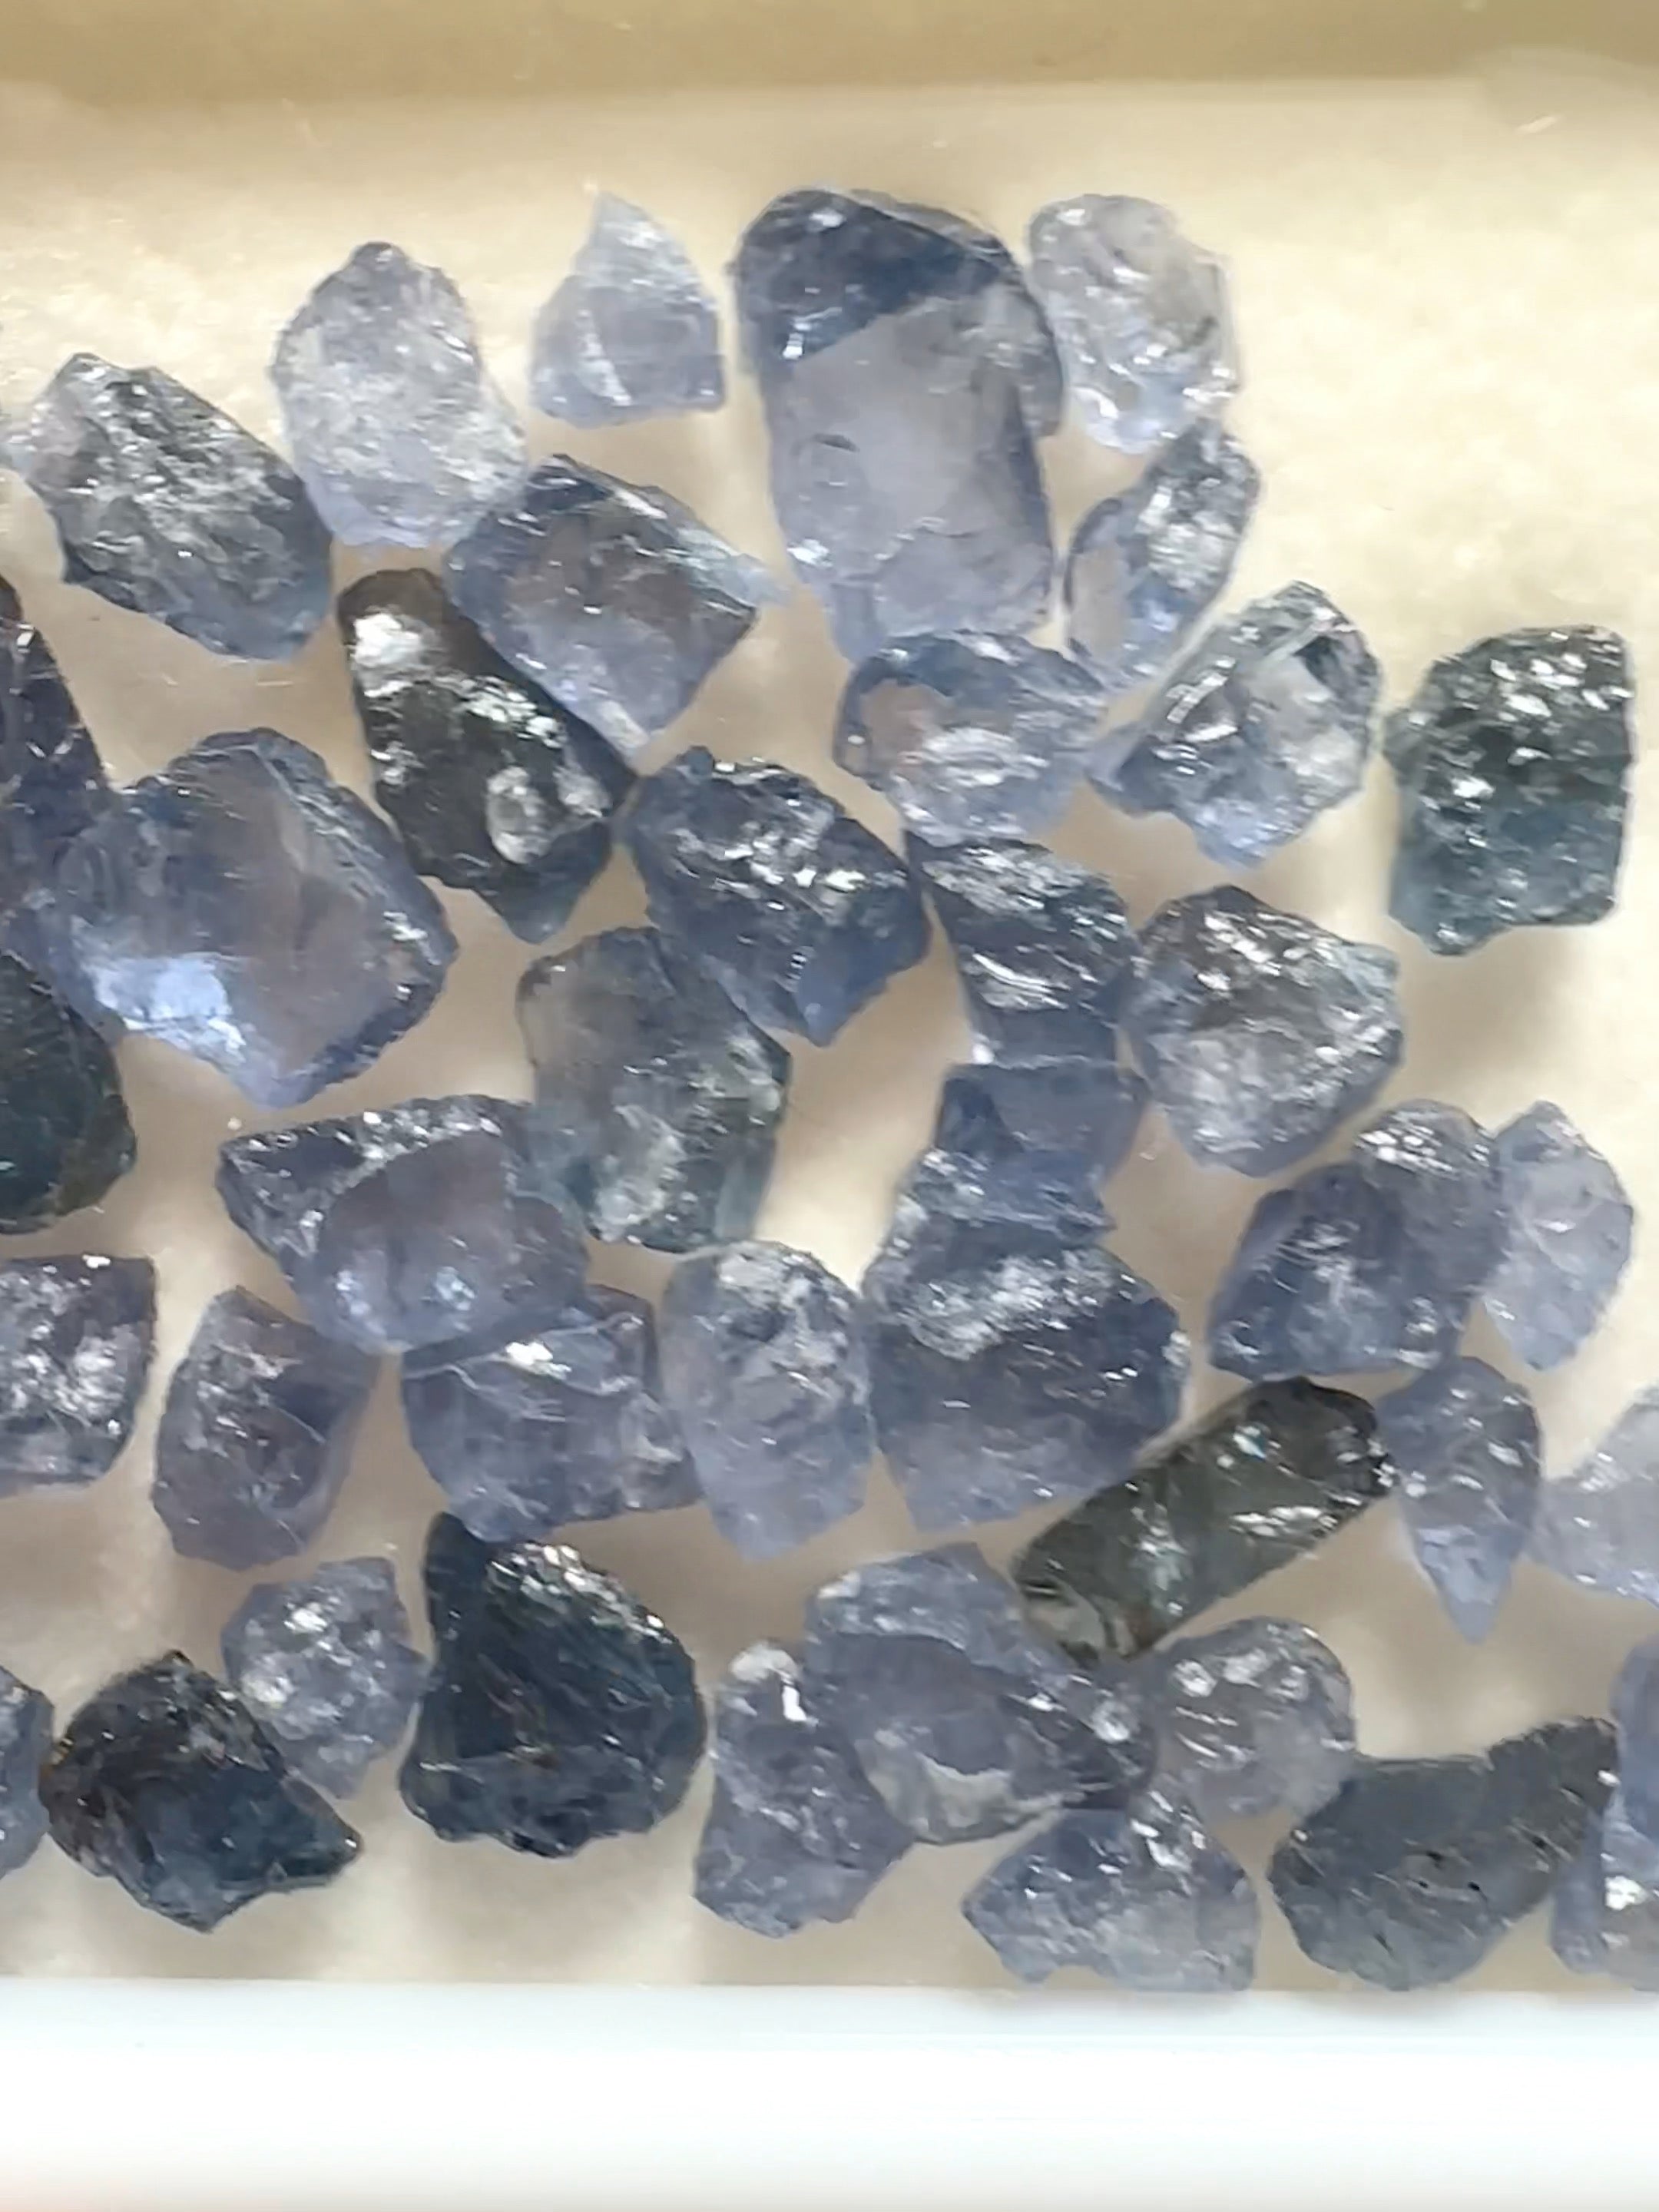 47.99ct Cobalt Spinel Lot, Mahenge, Tanzania, Untreated Unheated